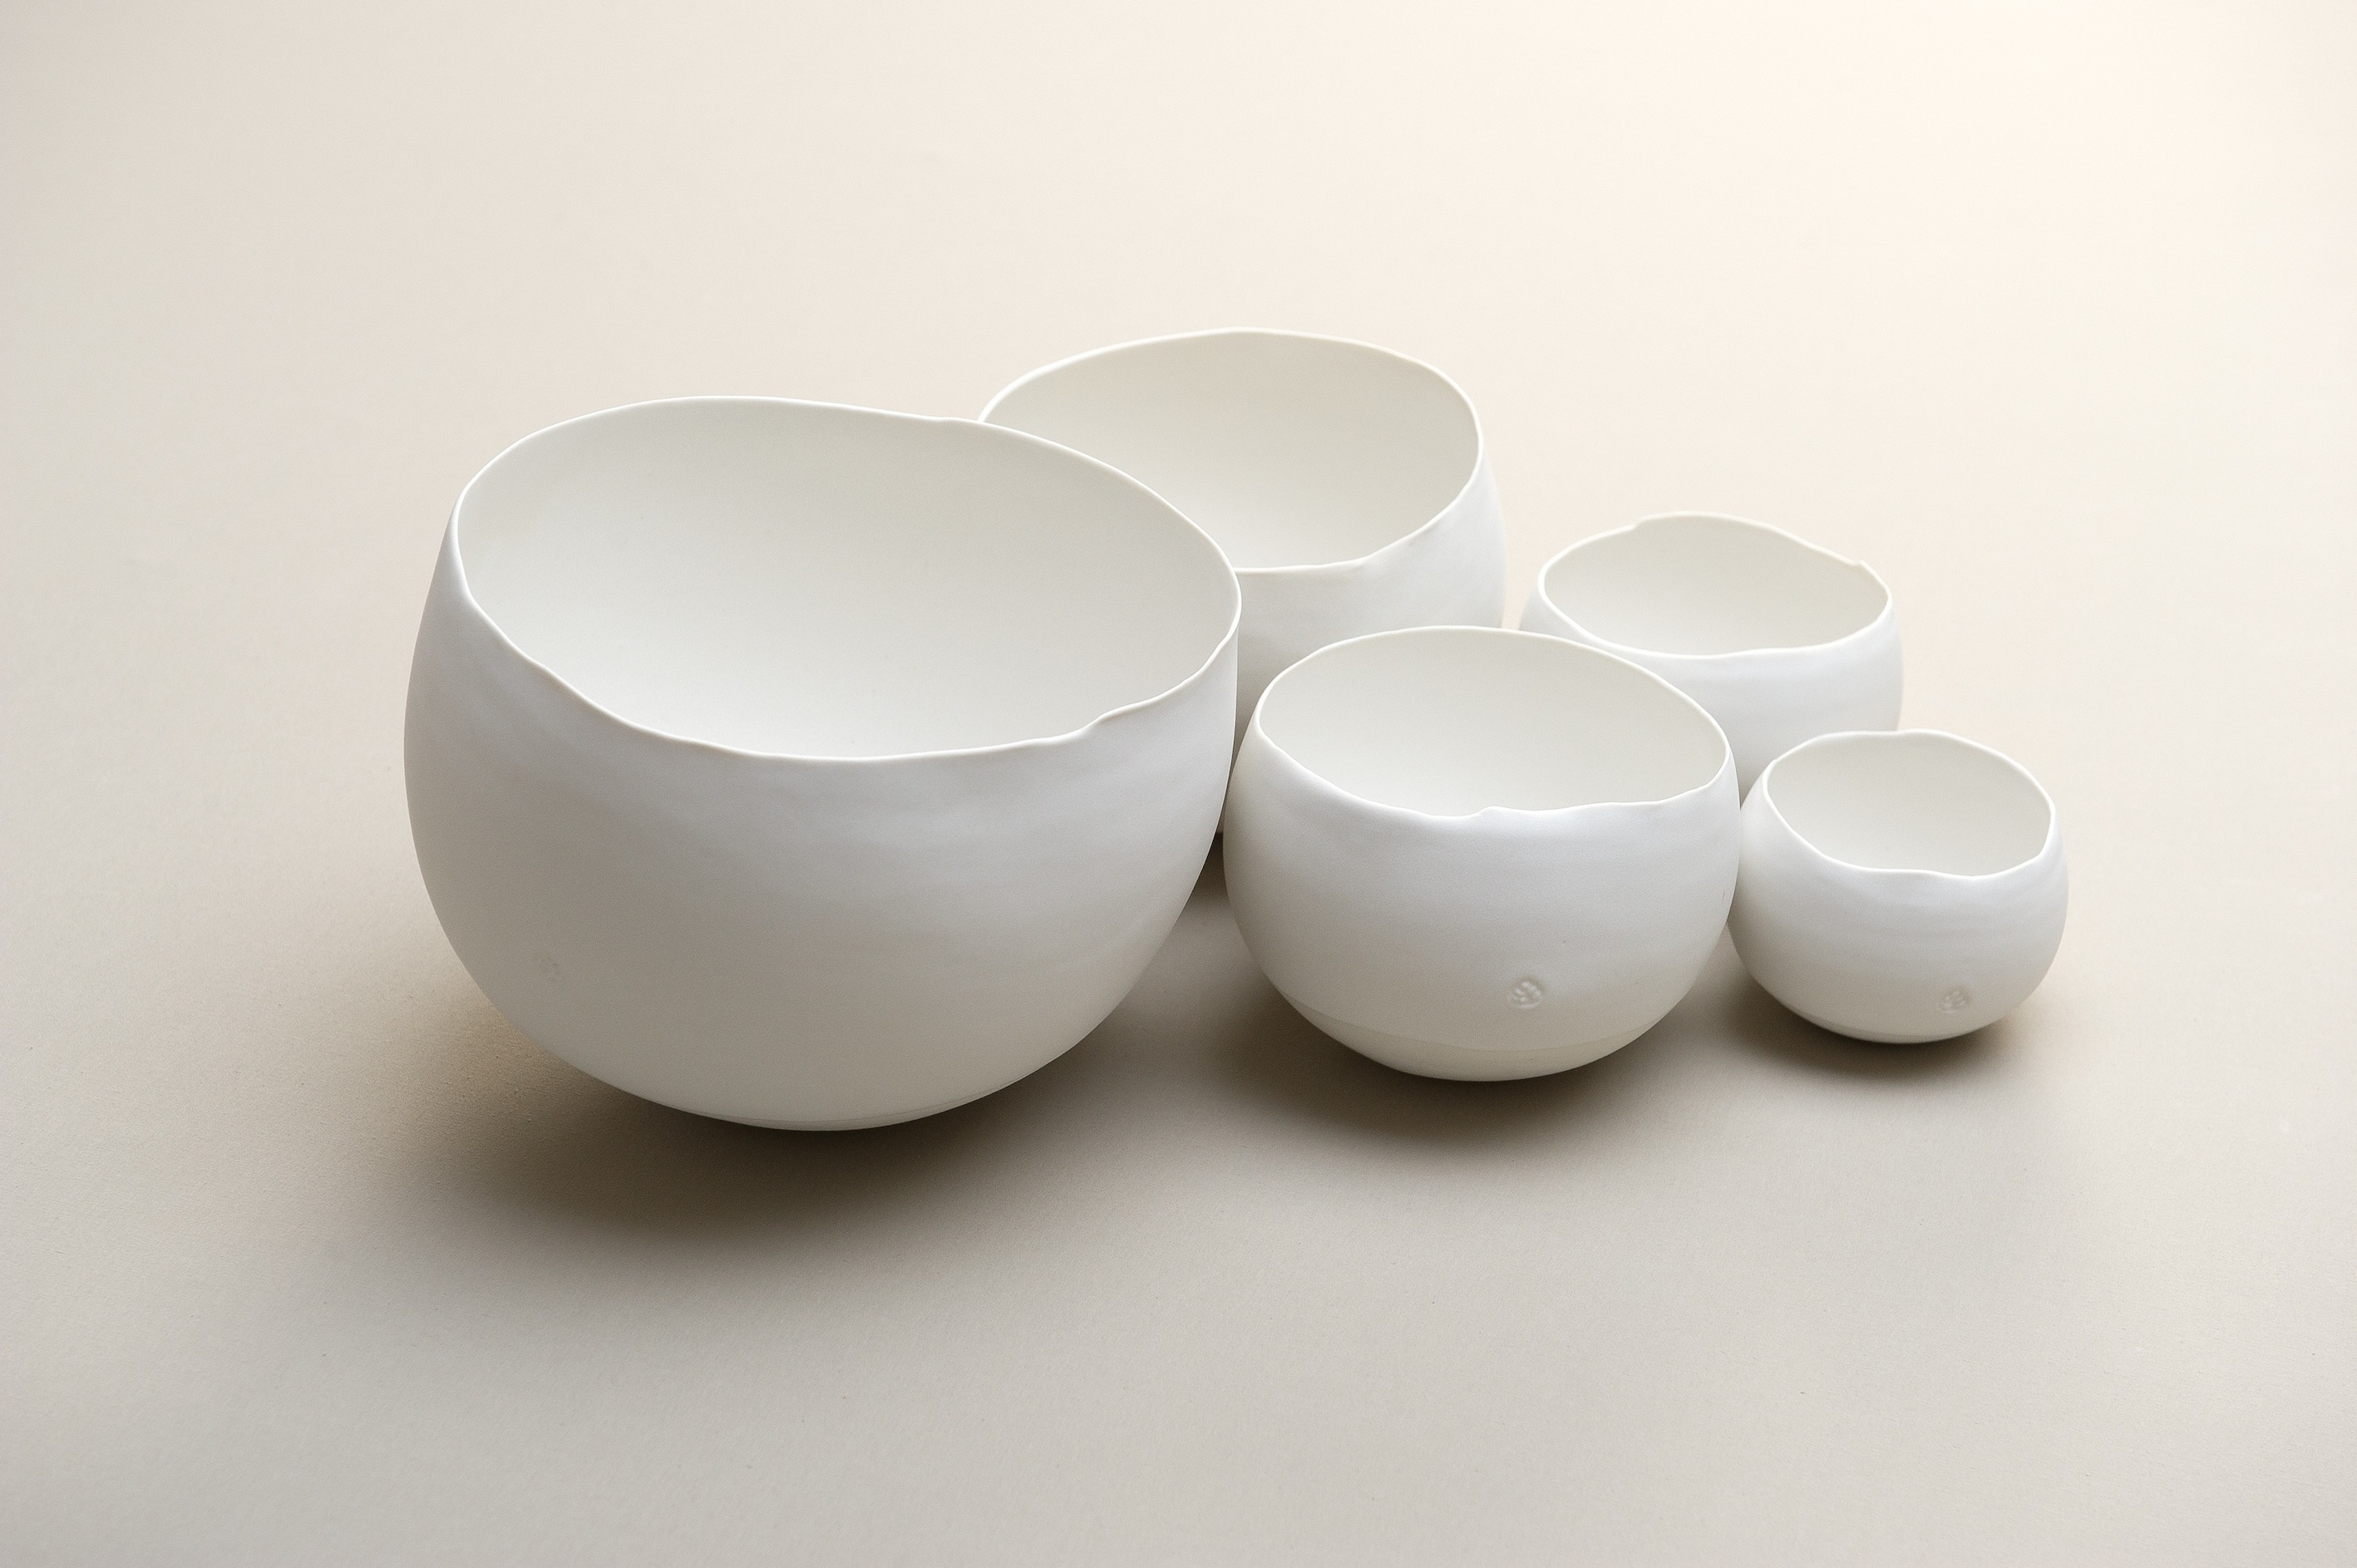 a10_mdba_mdby_ceramics_porcelain_manufactured_nathalie_derouet